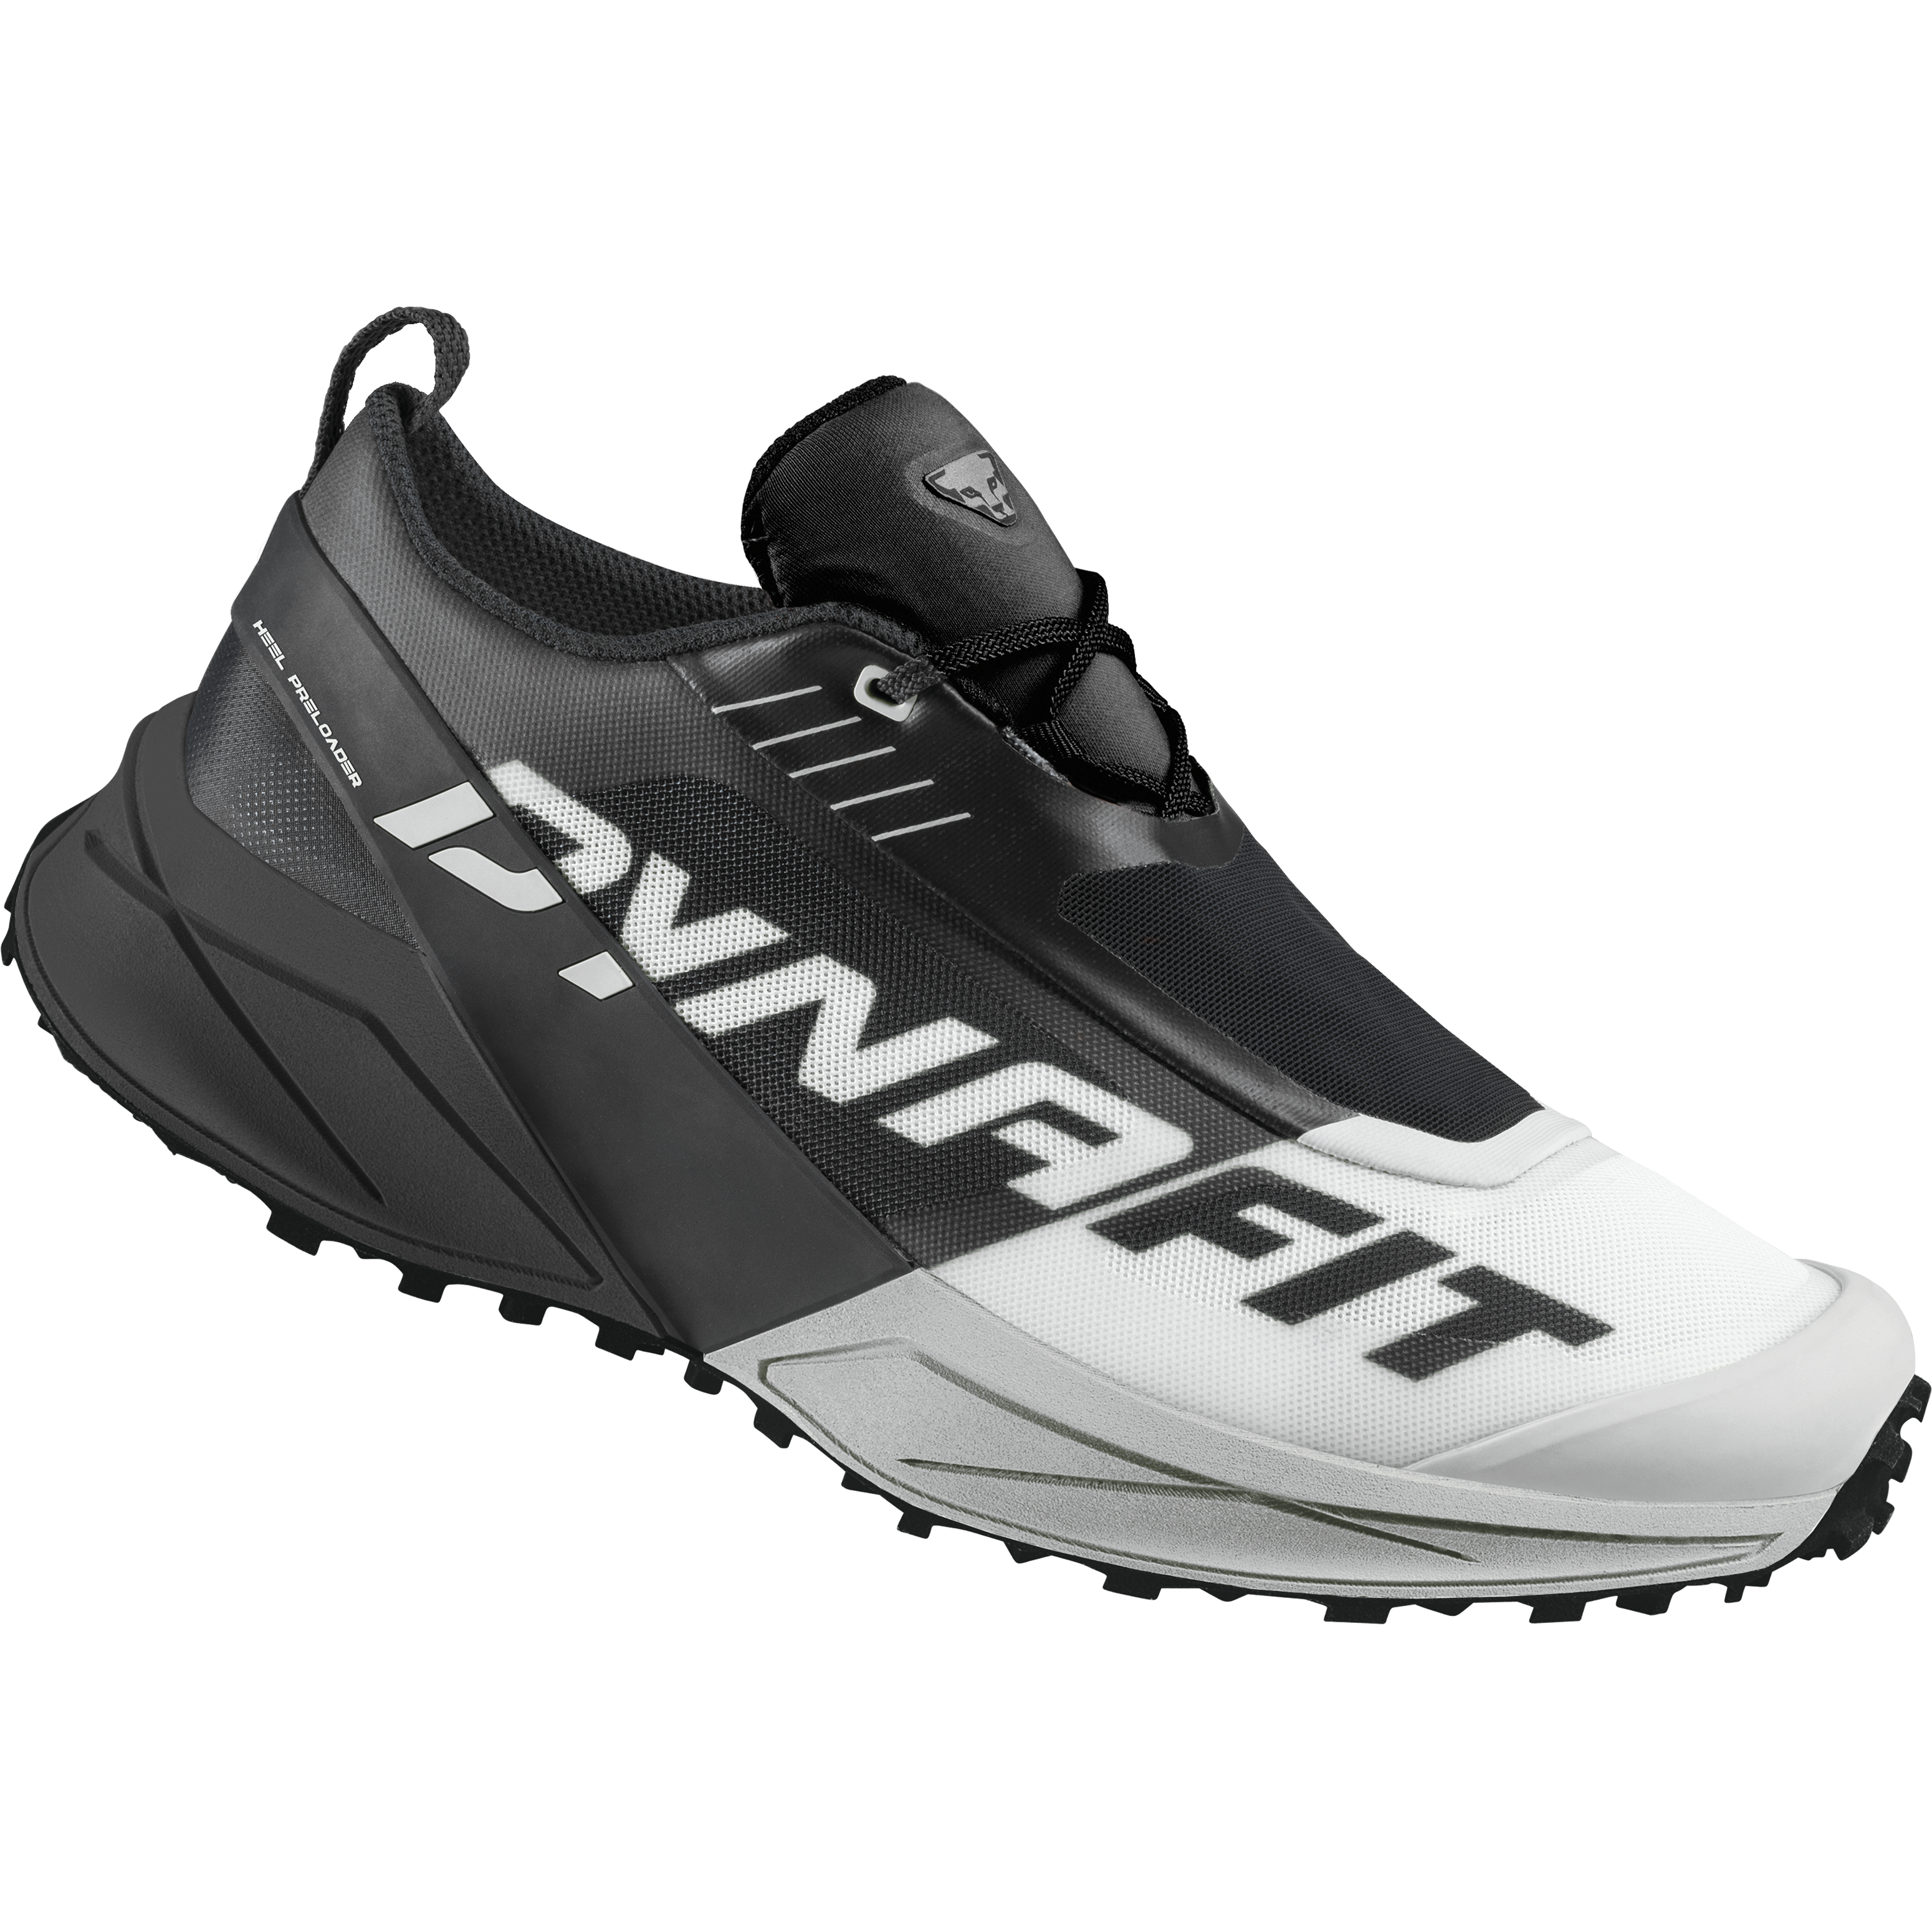 Dynafit Ultra 100 GTX - Zapatillas de trail running Hombre, Envío gratuito